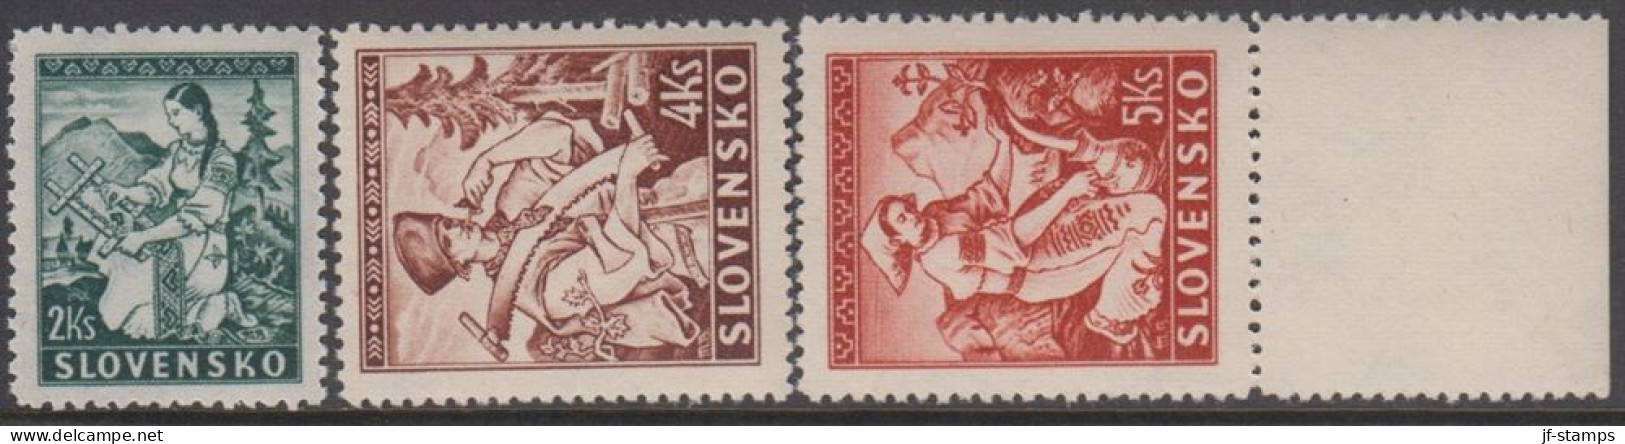 1939. SLOVENSKO National Cloths. Complete Set Of 3 Stamps. Never Hinged. (Michel 43-45) - JF365896 - Ungebraucht